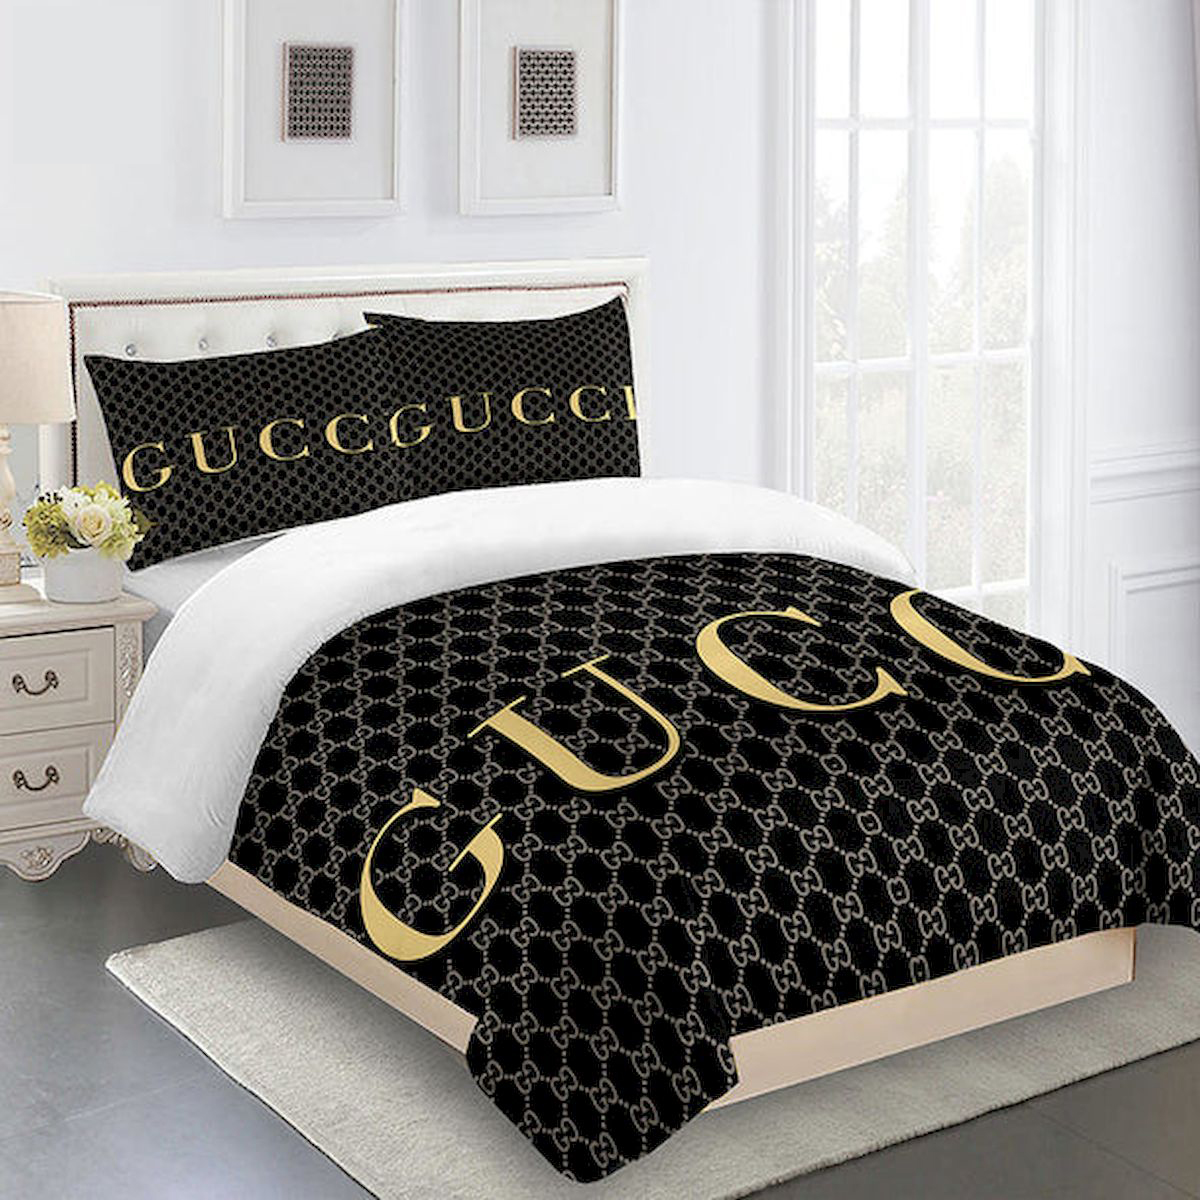 GC Black Luxury Brand High-End Bedding Set Home Decor HT Mia281103